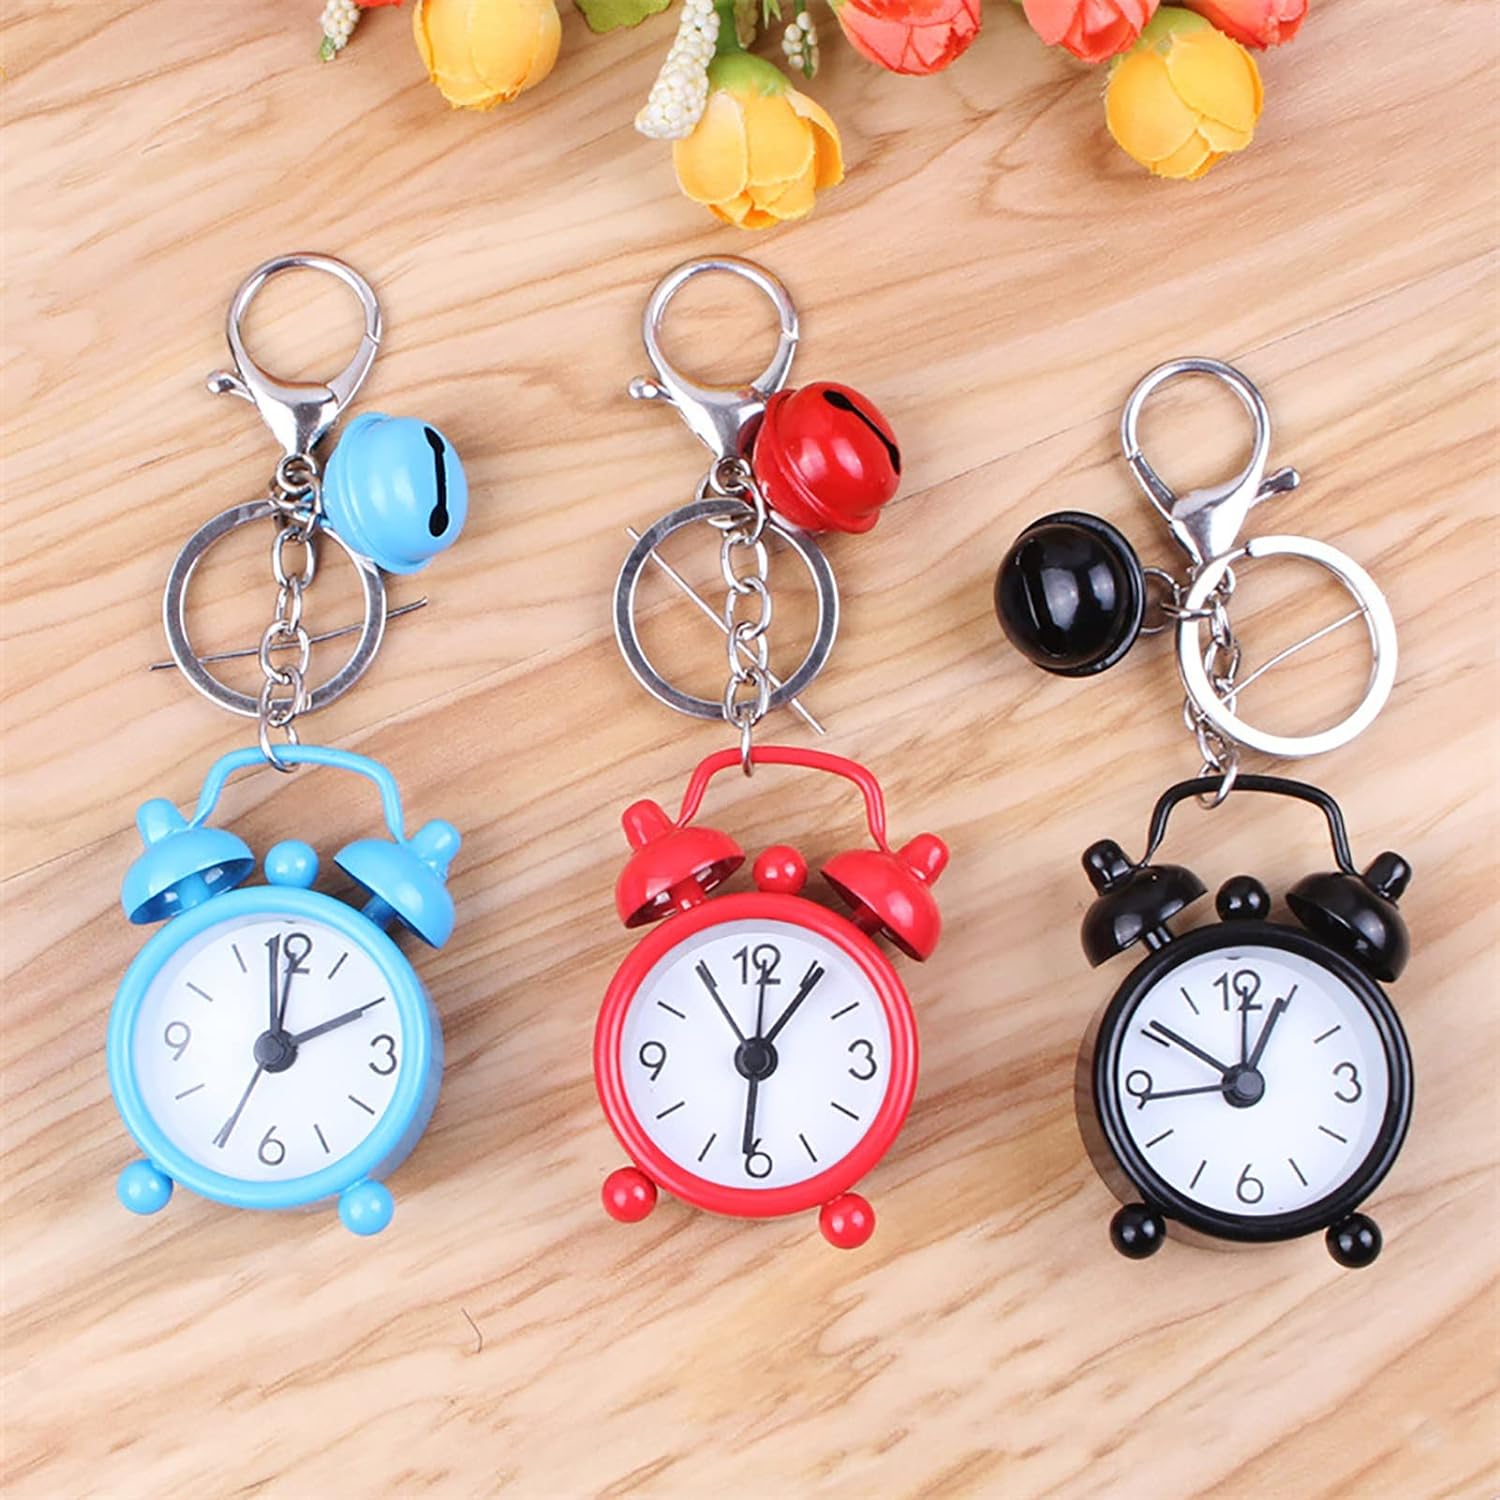 Alarm Clock Keychain, Mini Alarm Clock Keychain, Cute Analog Clock Time Key Pendant, Keychain Bag Ornament, Portable Multifunctional Clock Pendant for Bags